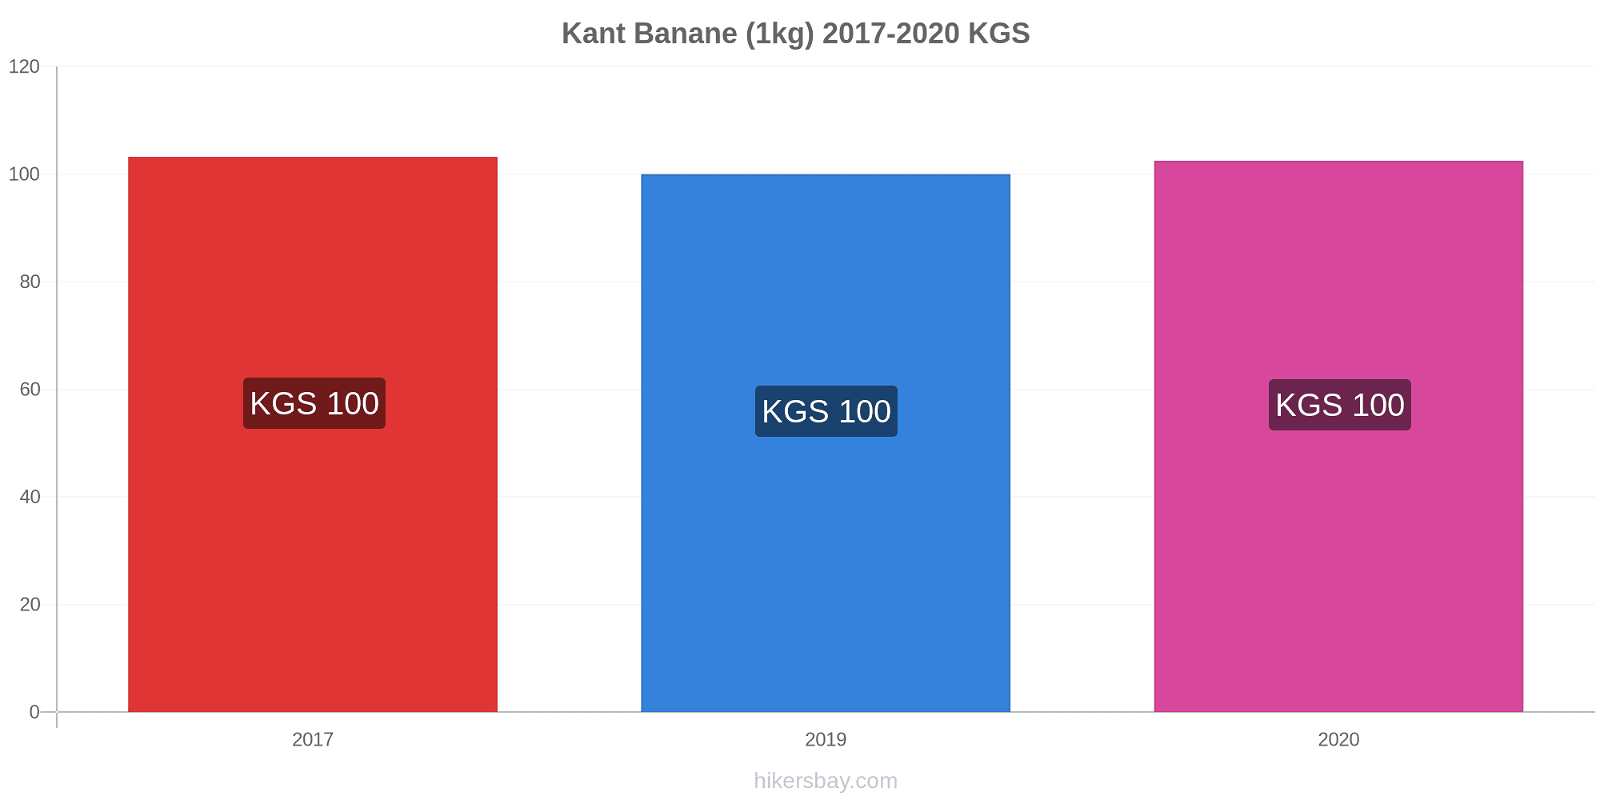 Kant variazioni di prezzo Banana (1kg) hikersbay.com